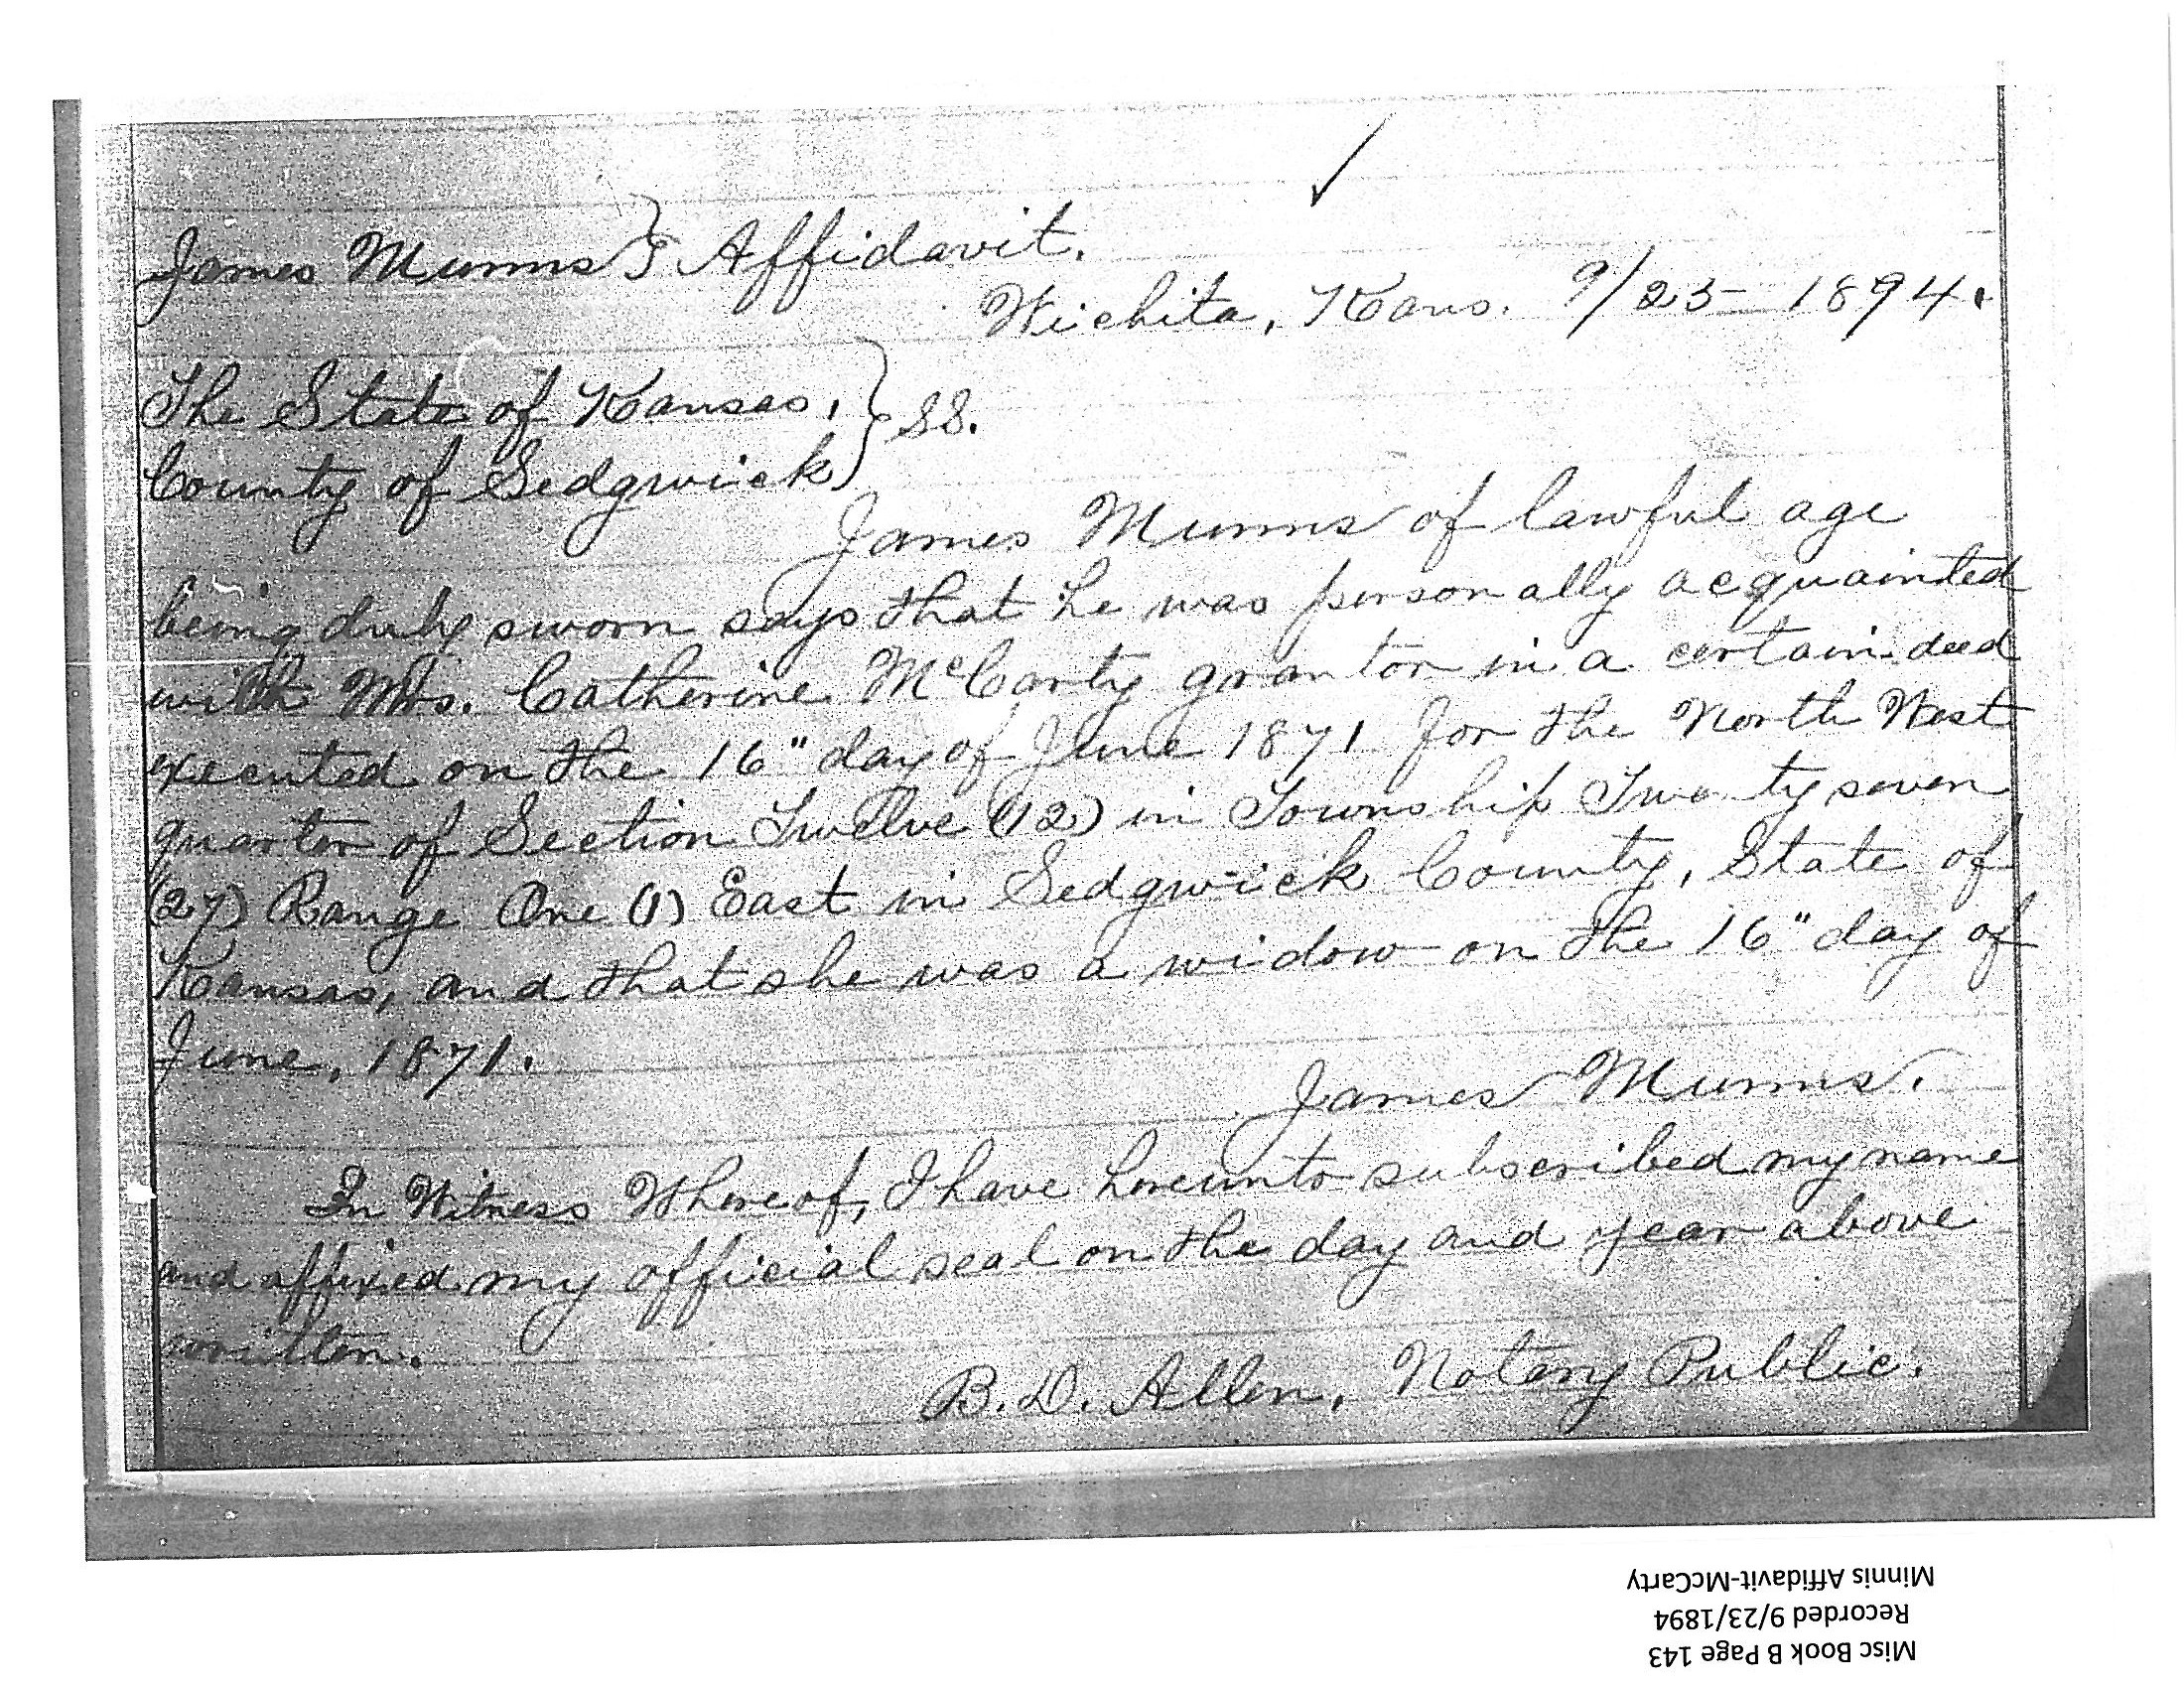 Munns Affidavit June 16 1871